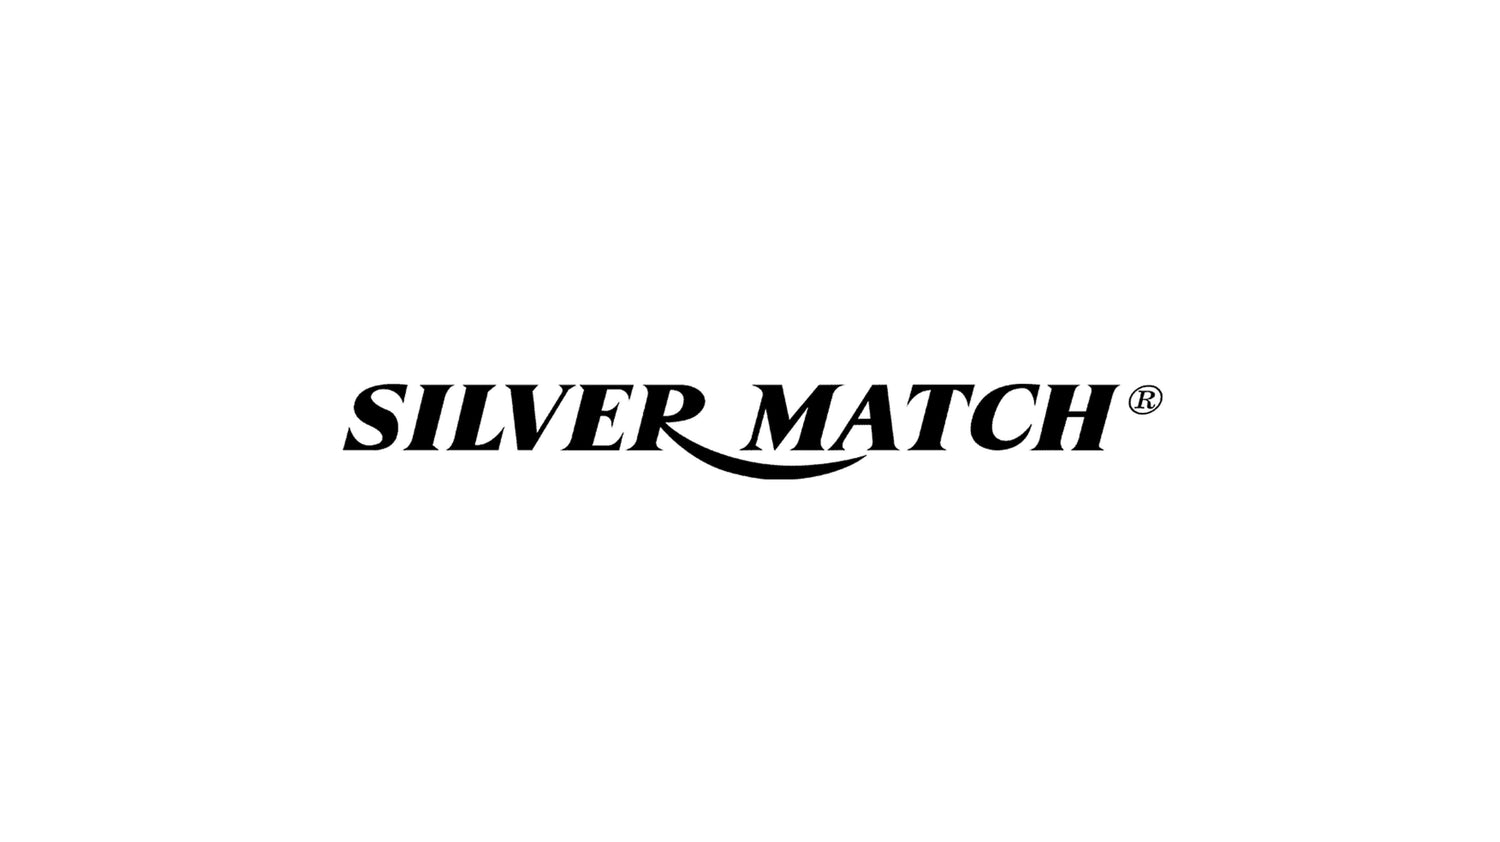 Silver match logo